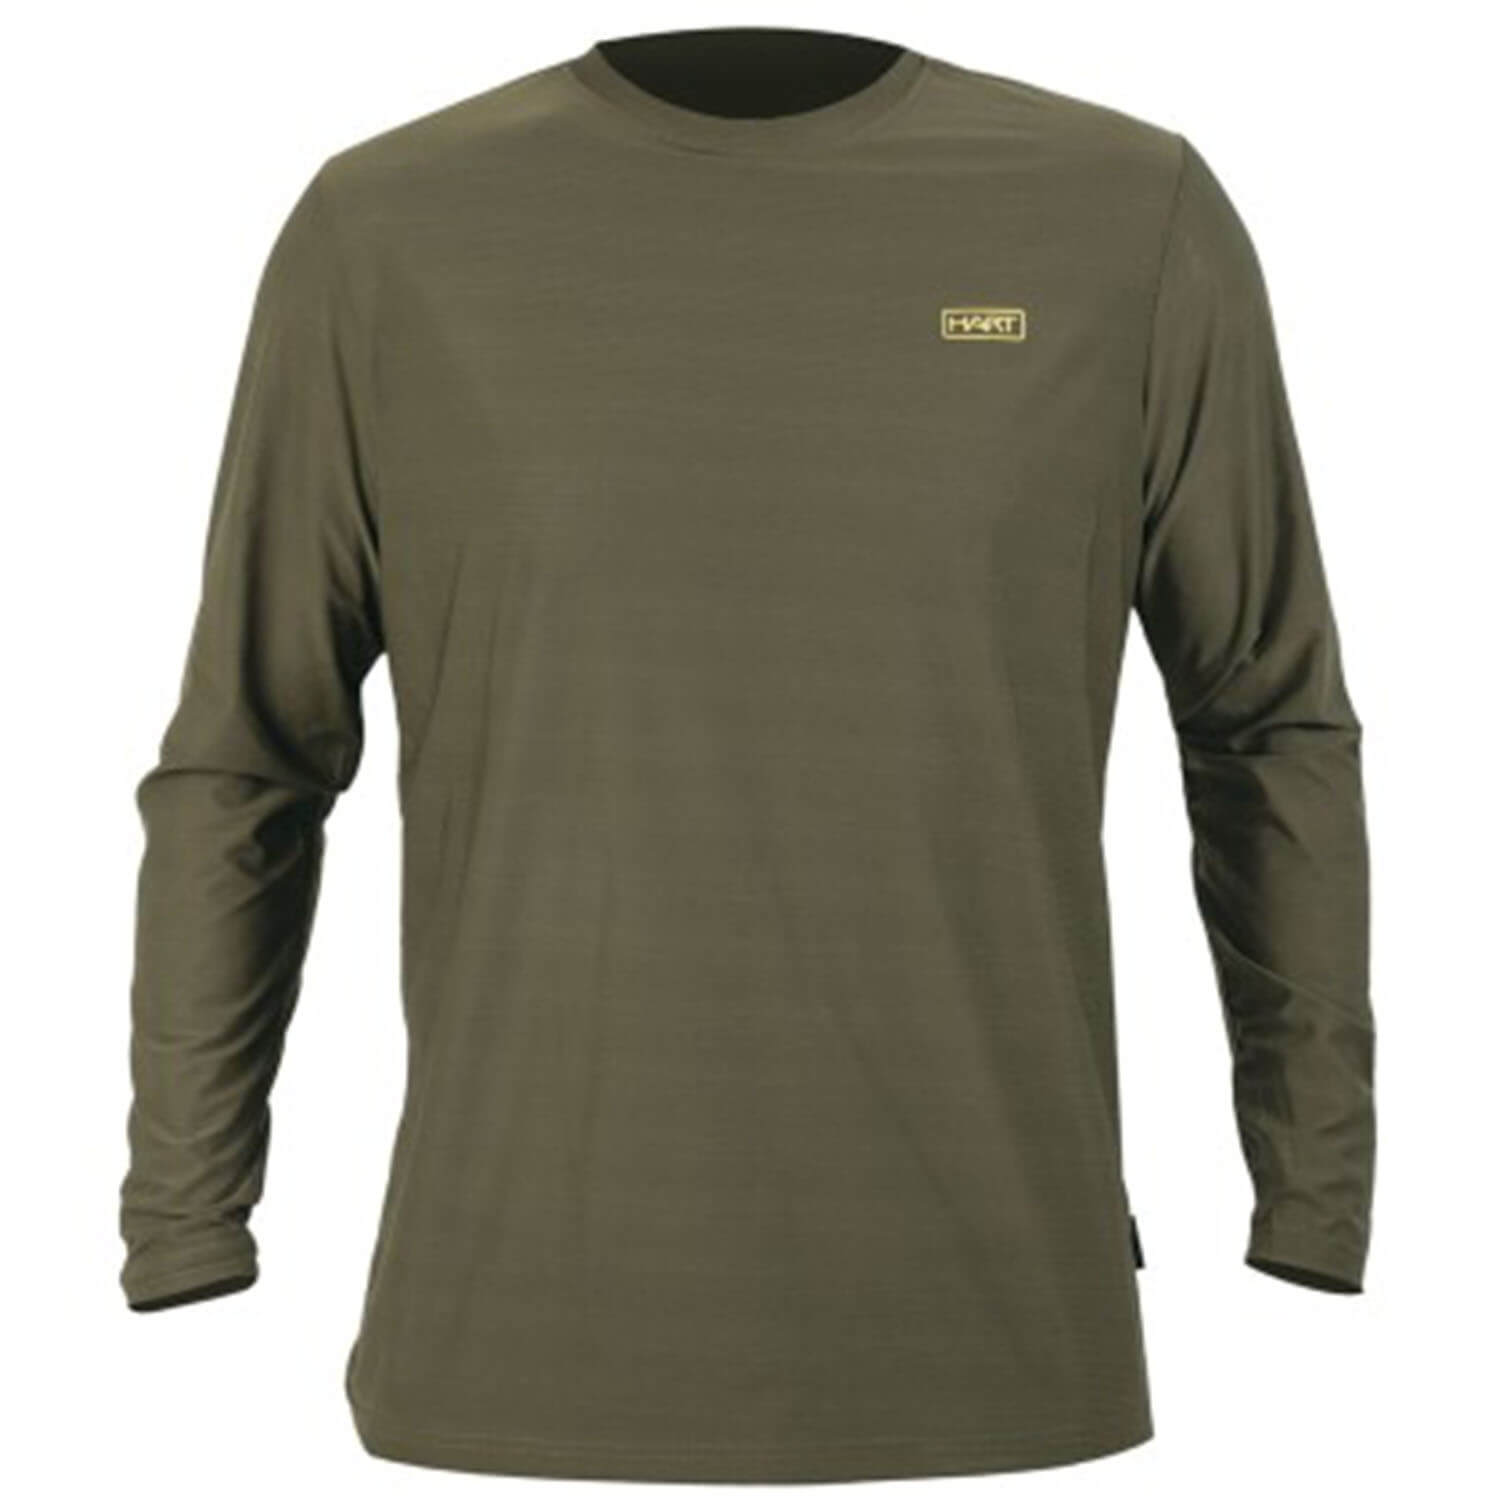  Hart Ural-TL long-sleeved shirt (green) -  Roe Buck Hunting